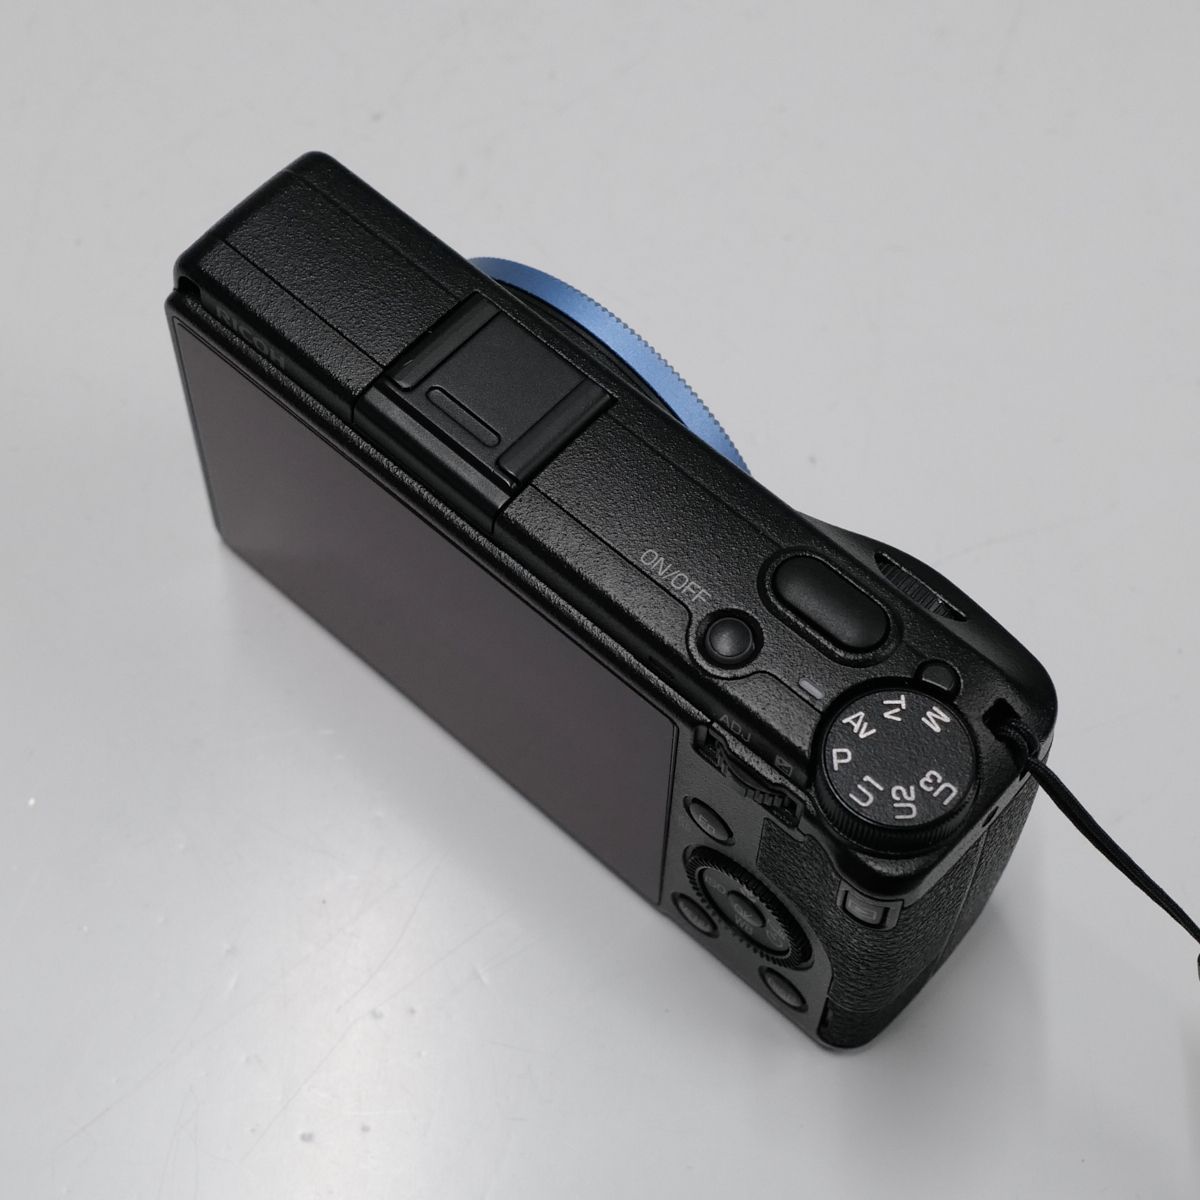 RICOH GR III USED超美品 GR3 デジタルカメラ 本体+バッテリー Wi-Fi 単焦点18.3mm F2.8 APS-C  スナップシューター 完動品 中古 CP5562